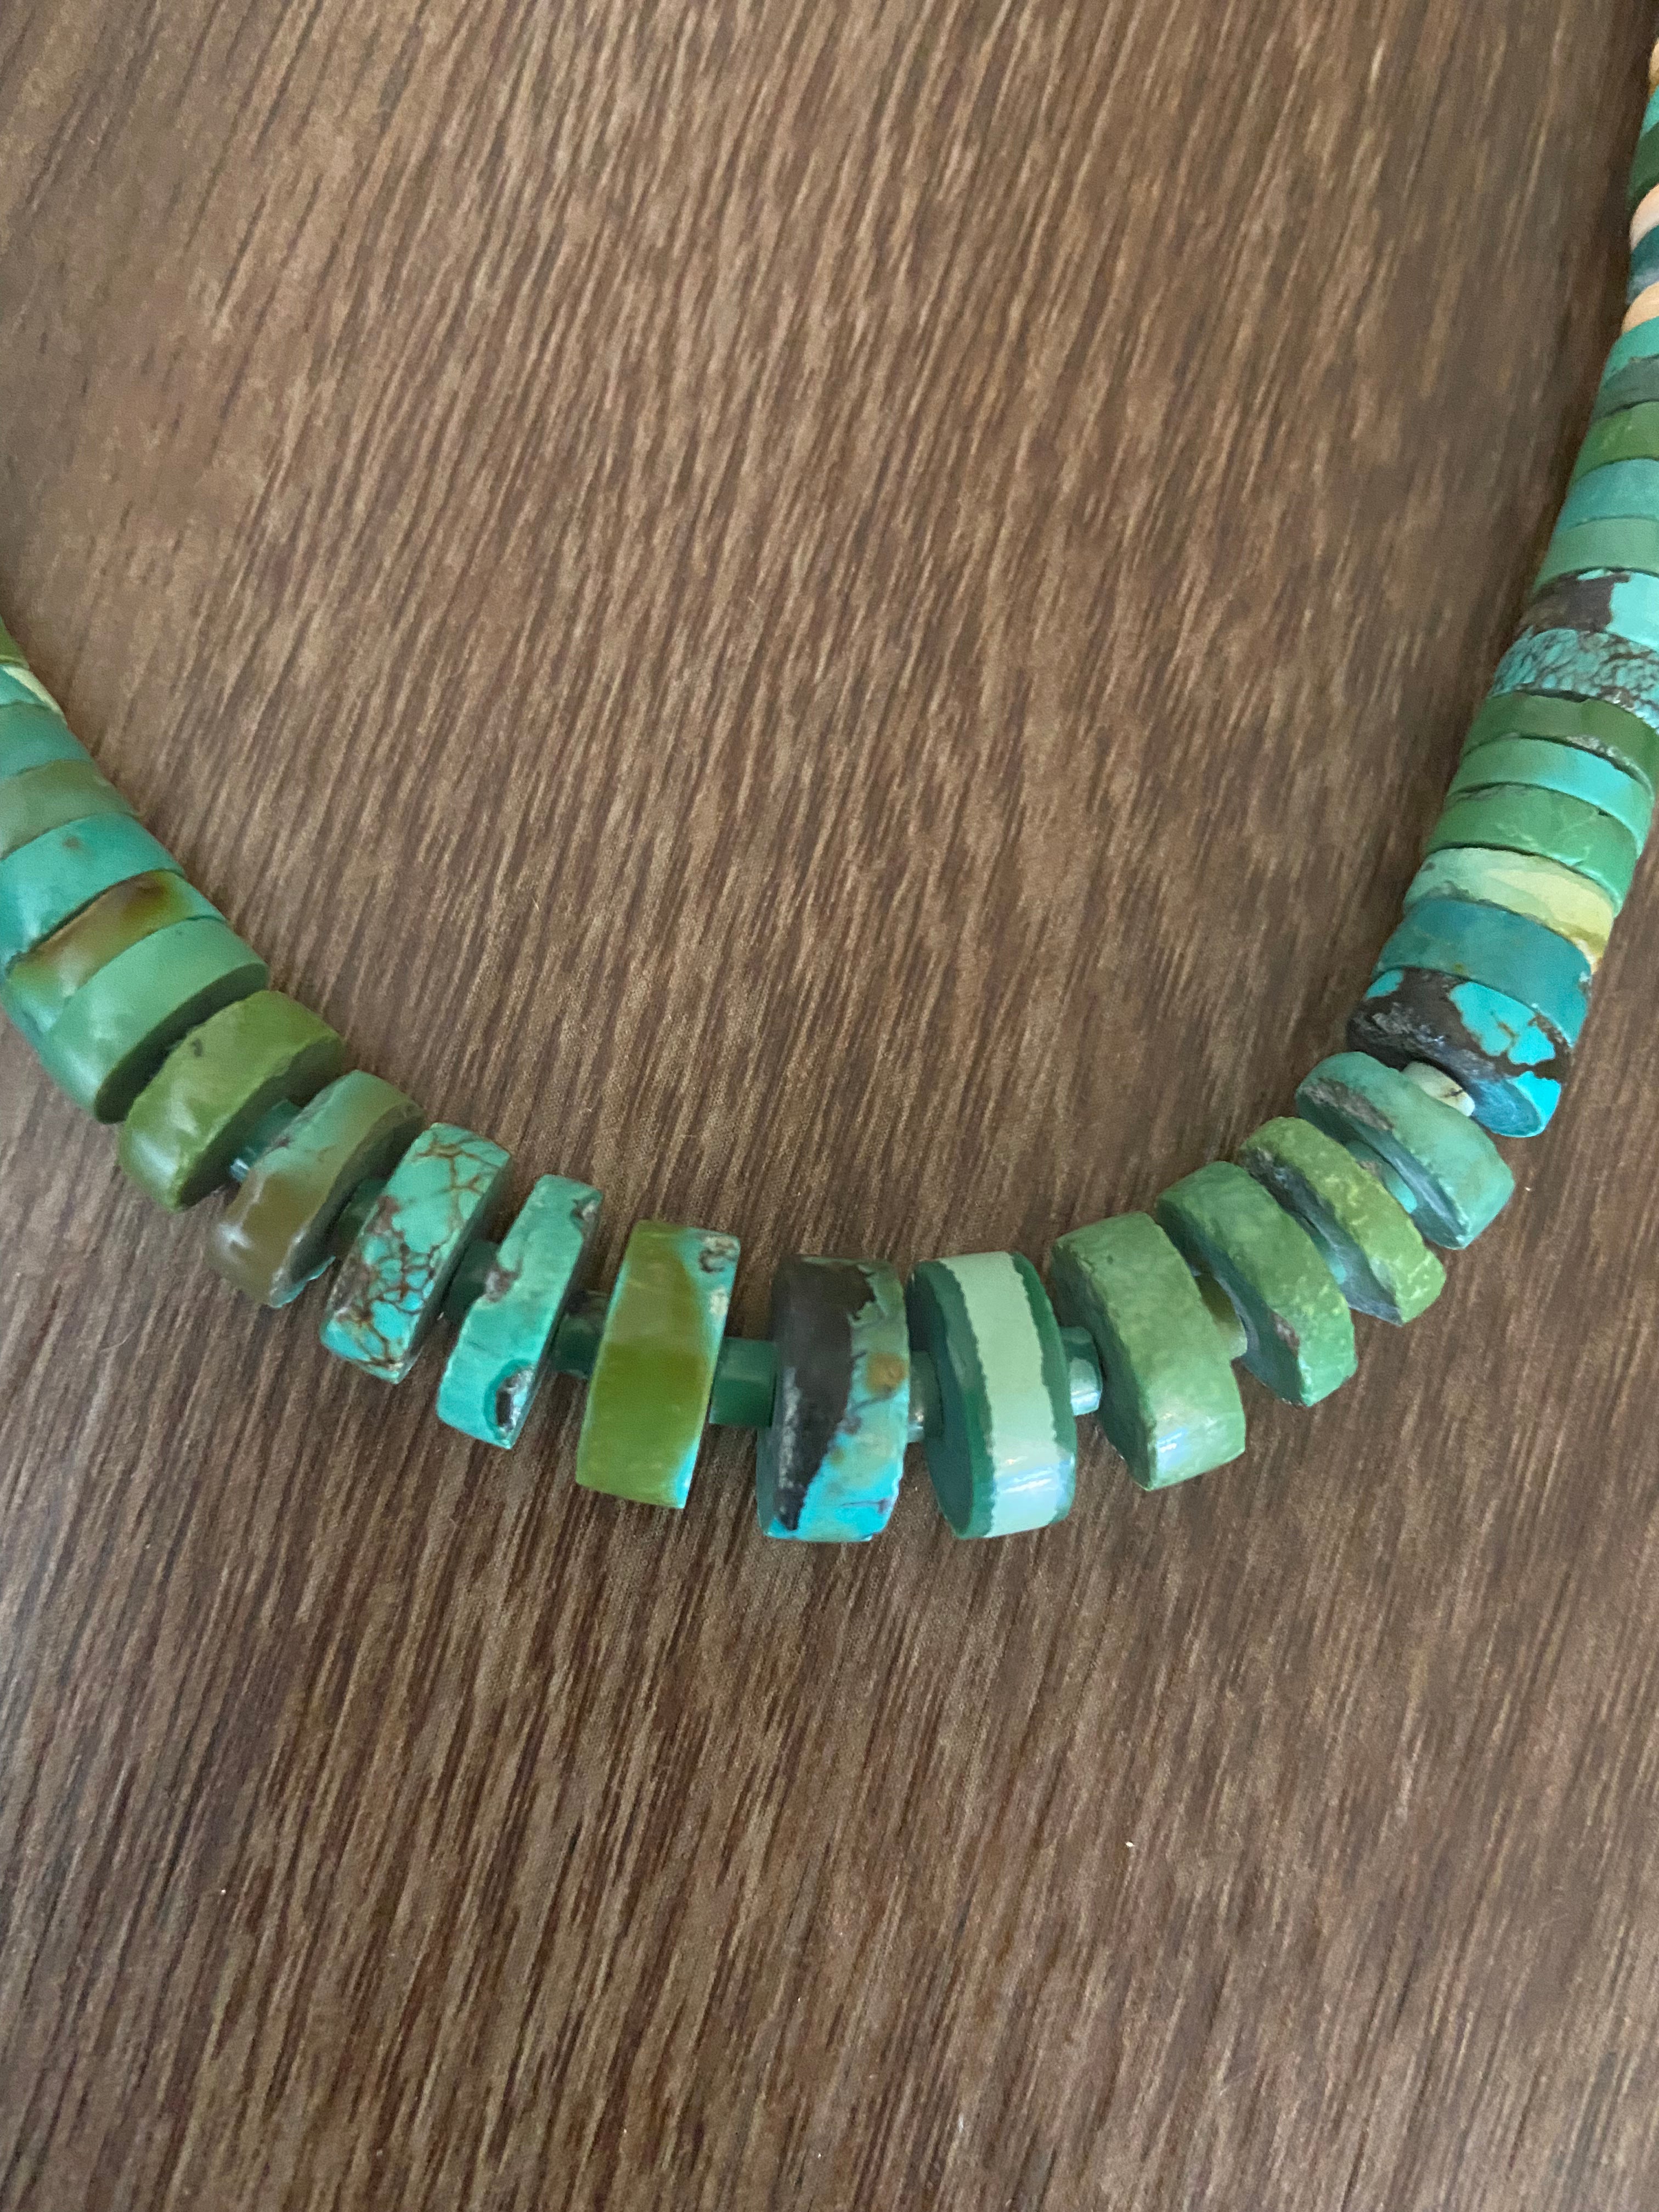 1980's Santo Domingo Heishi turquoise necklace